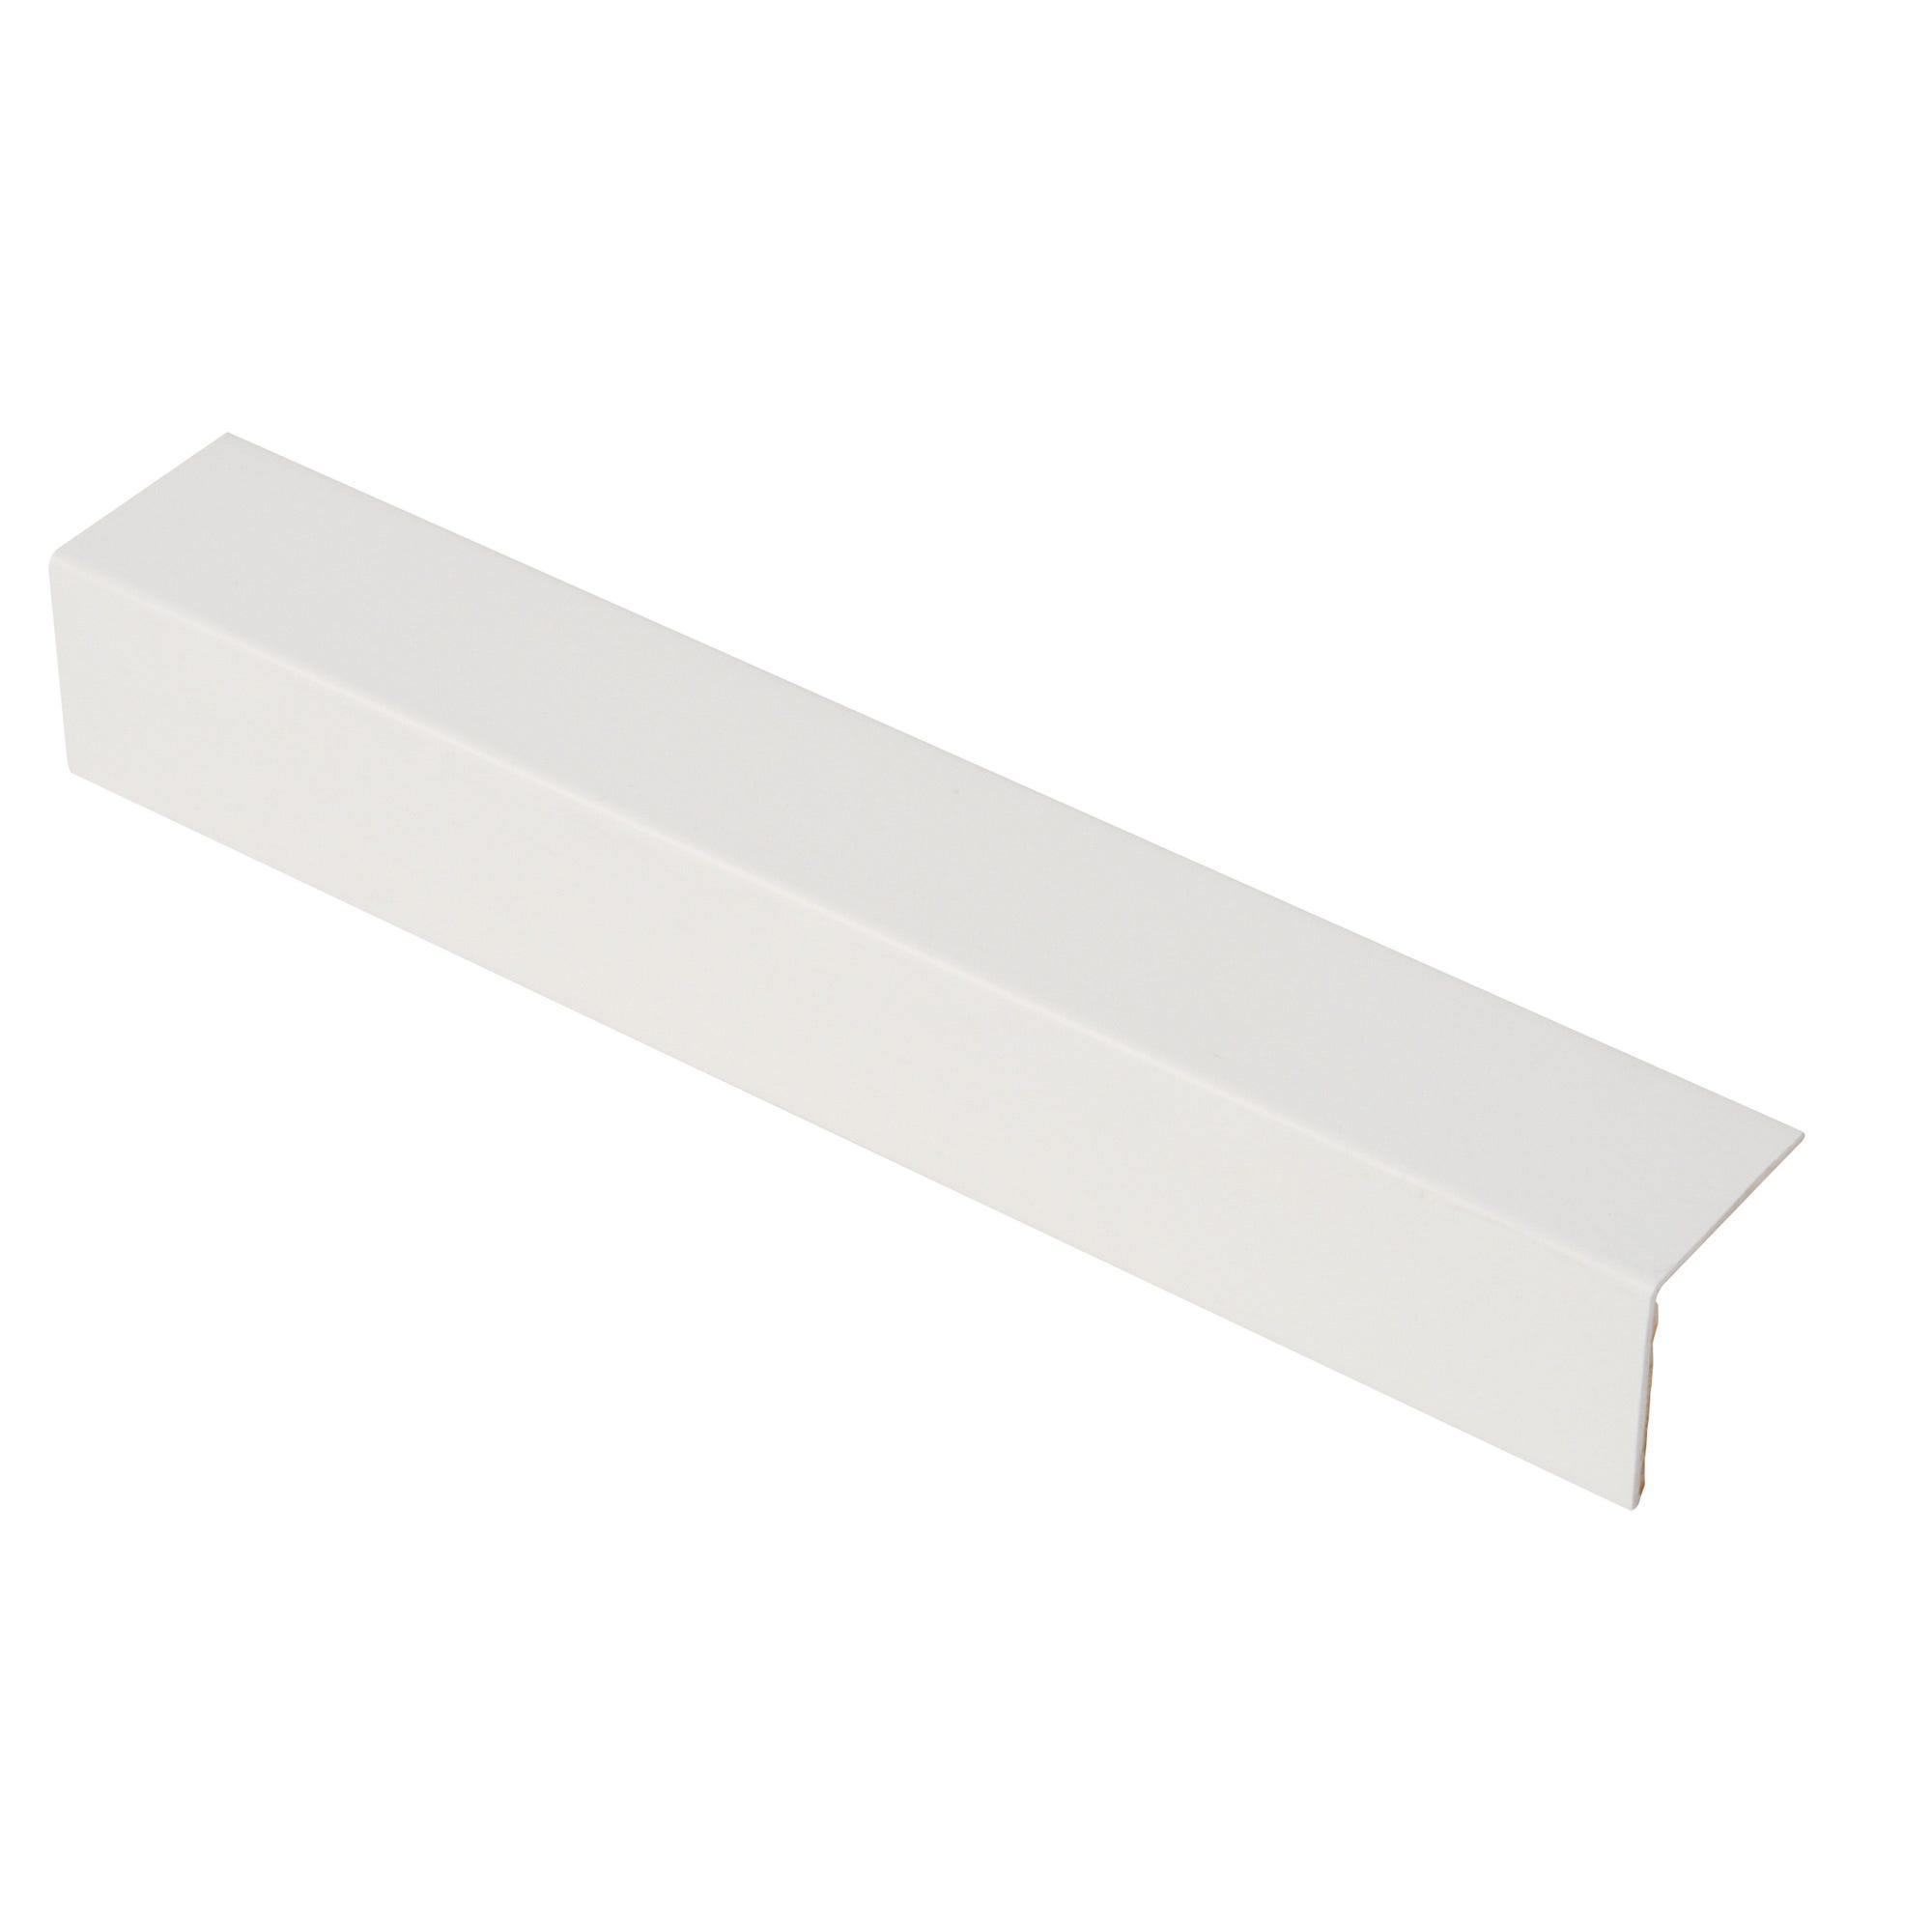 Cornière PVC blanc adhésif 25 x 25 mm L.260 cm 2